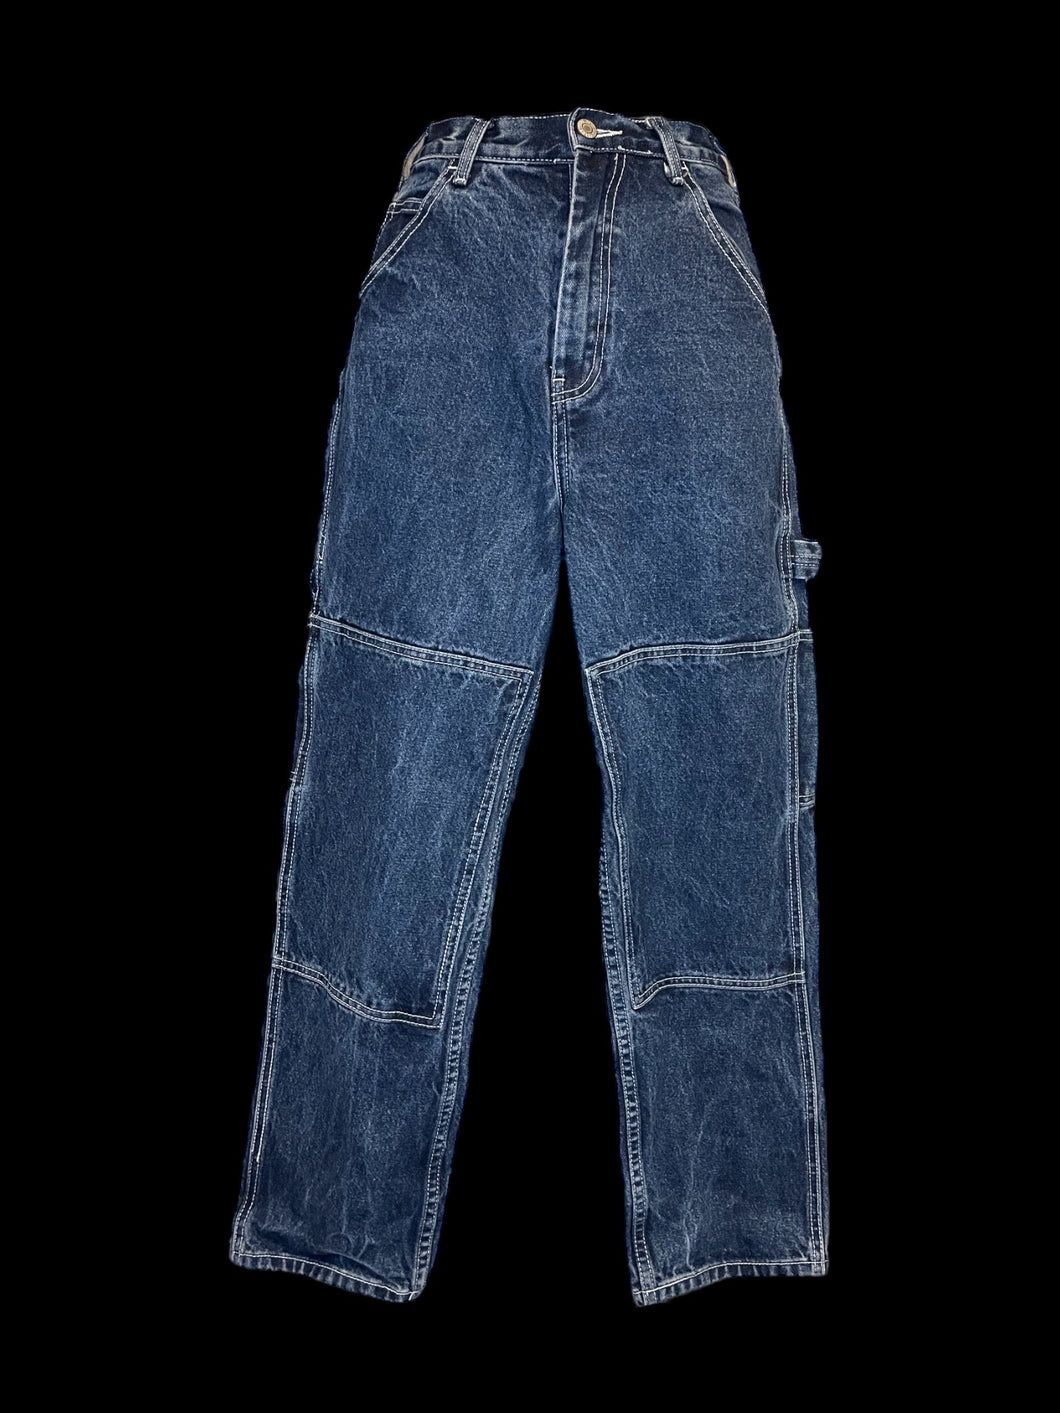 XS Dark blue distressed denim high waist straight leg pants w/ white stitching, pockets, belt loops, & button/zipper closure